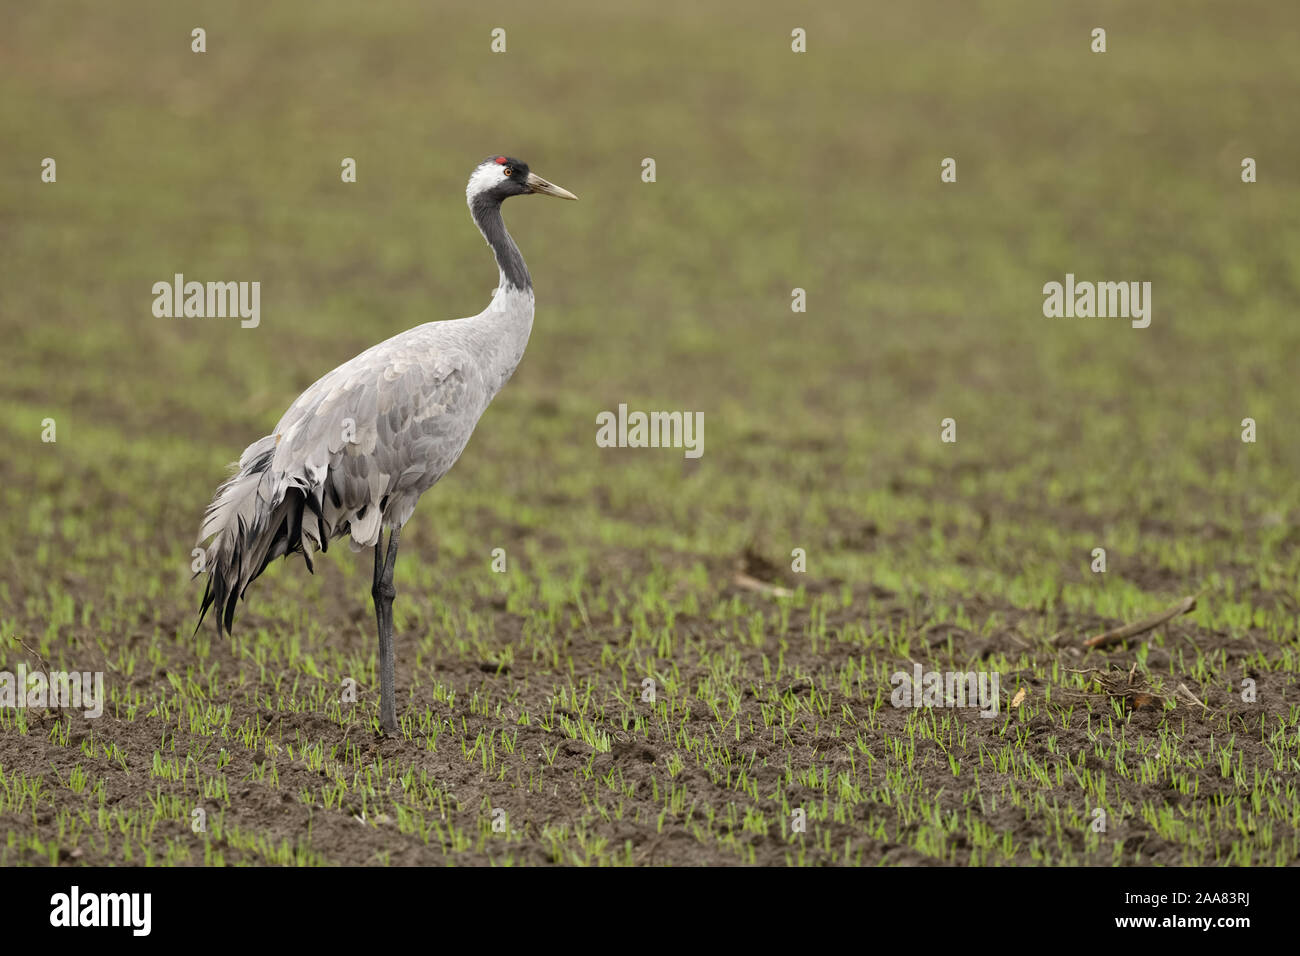 Common Crane / Graukranich ( Grus grus ), adult, standing on farmland, winter wheat, during migration, wildlife, Europe. Stock Photo